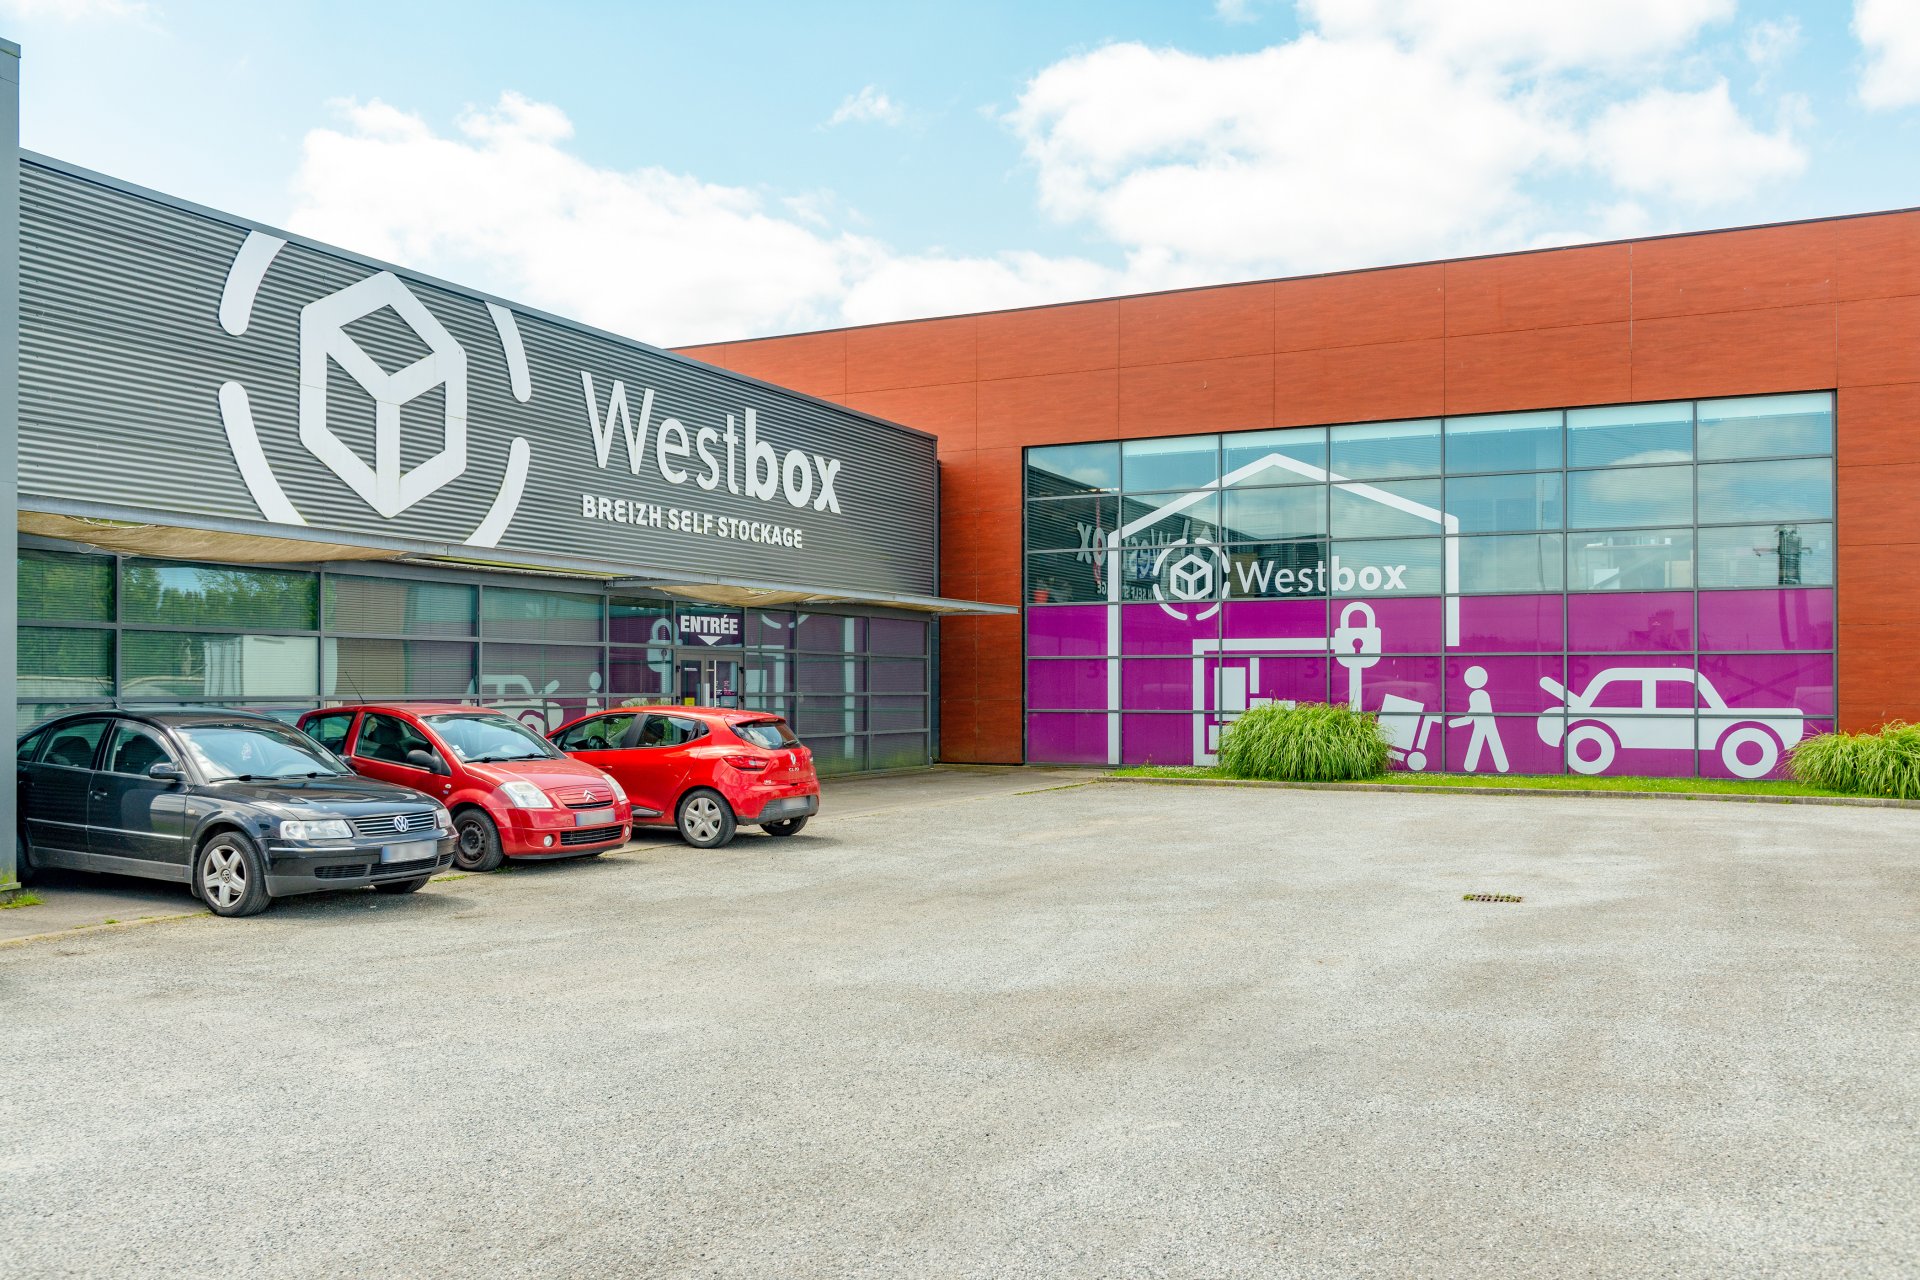 Westbox pour stocker vos affaires